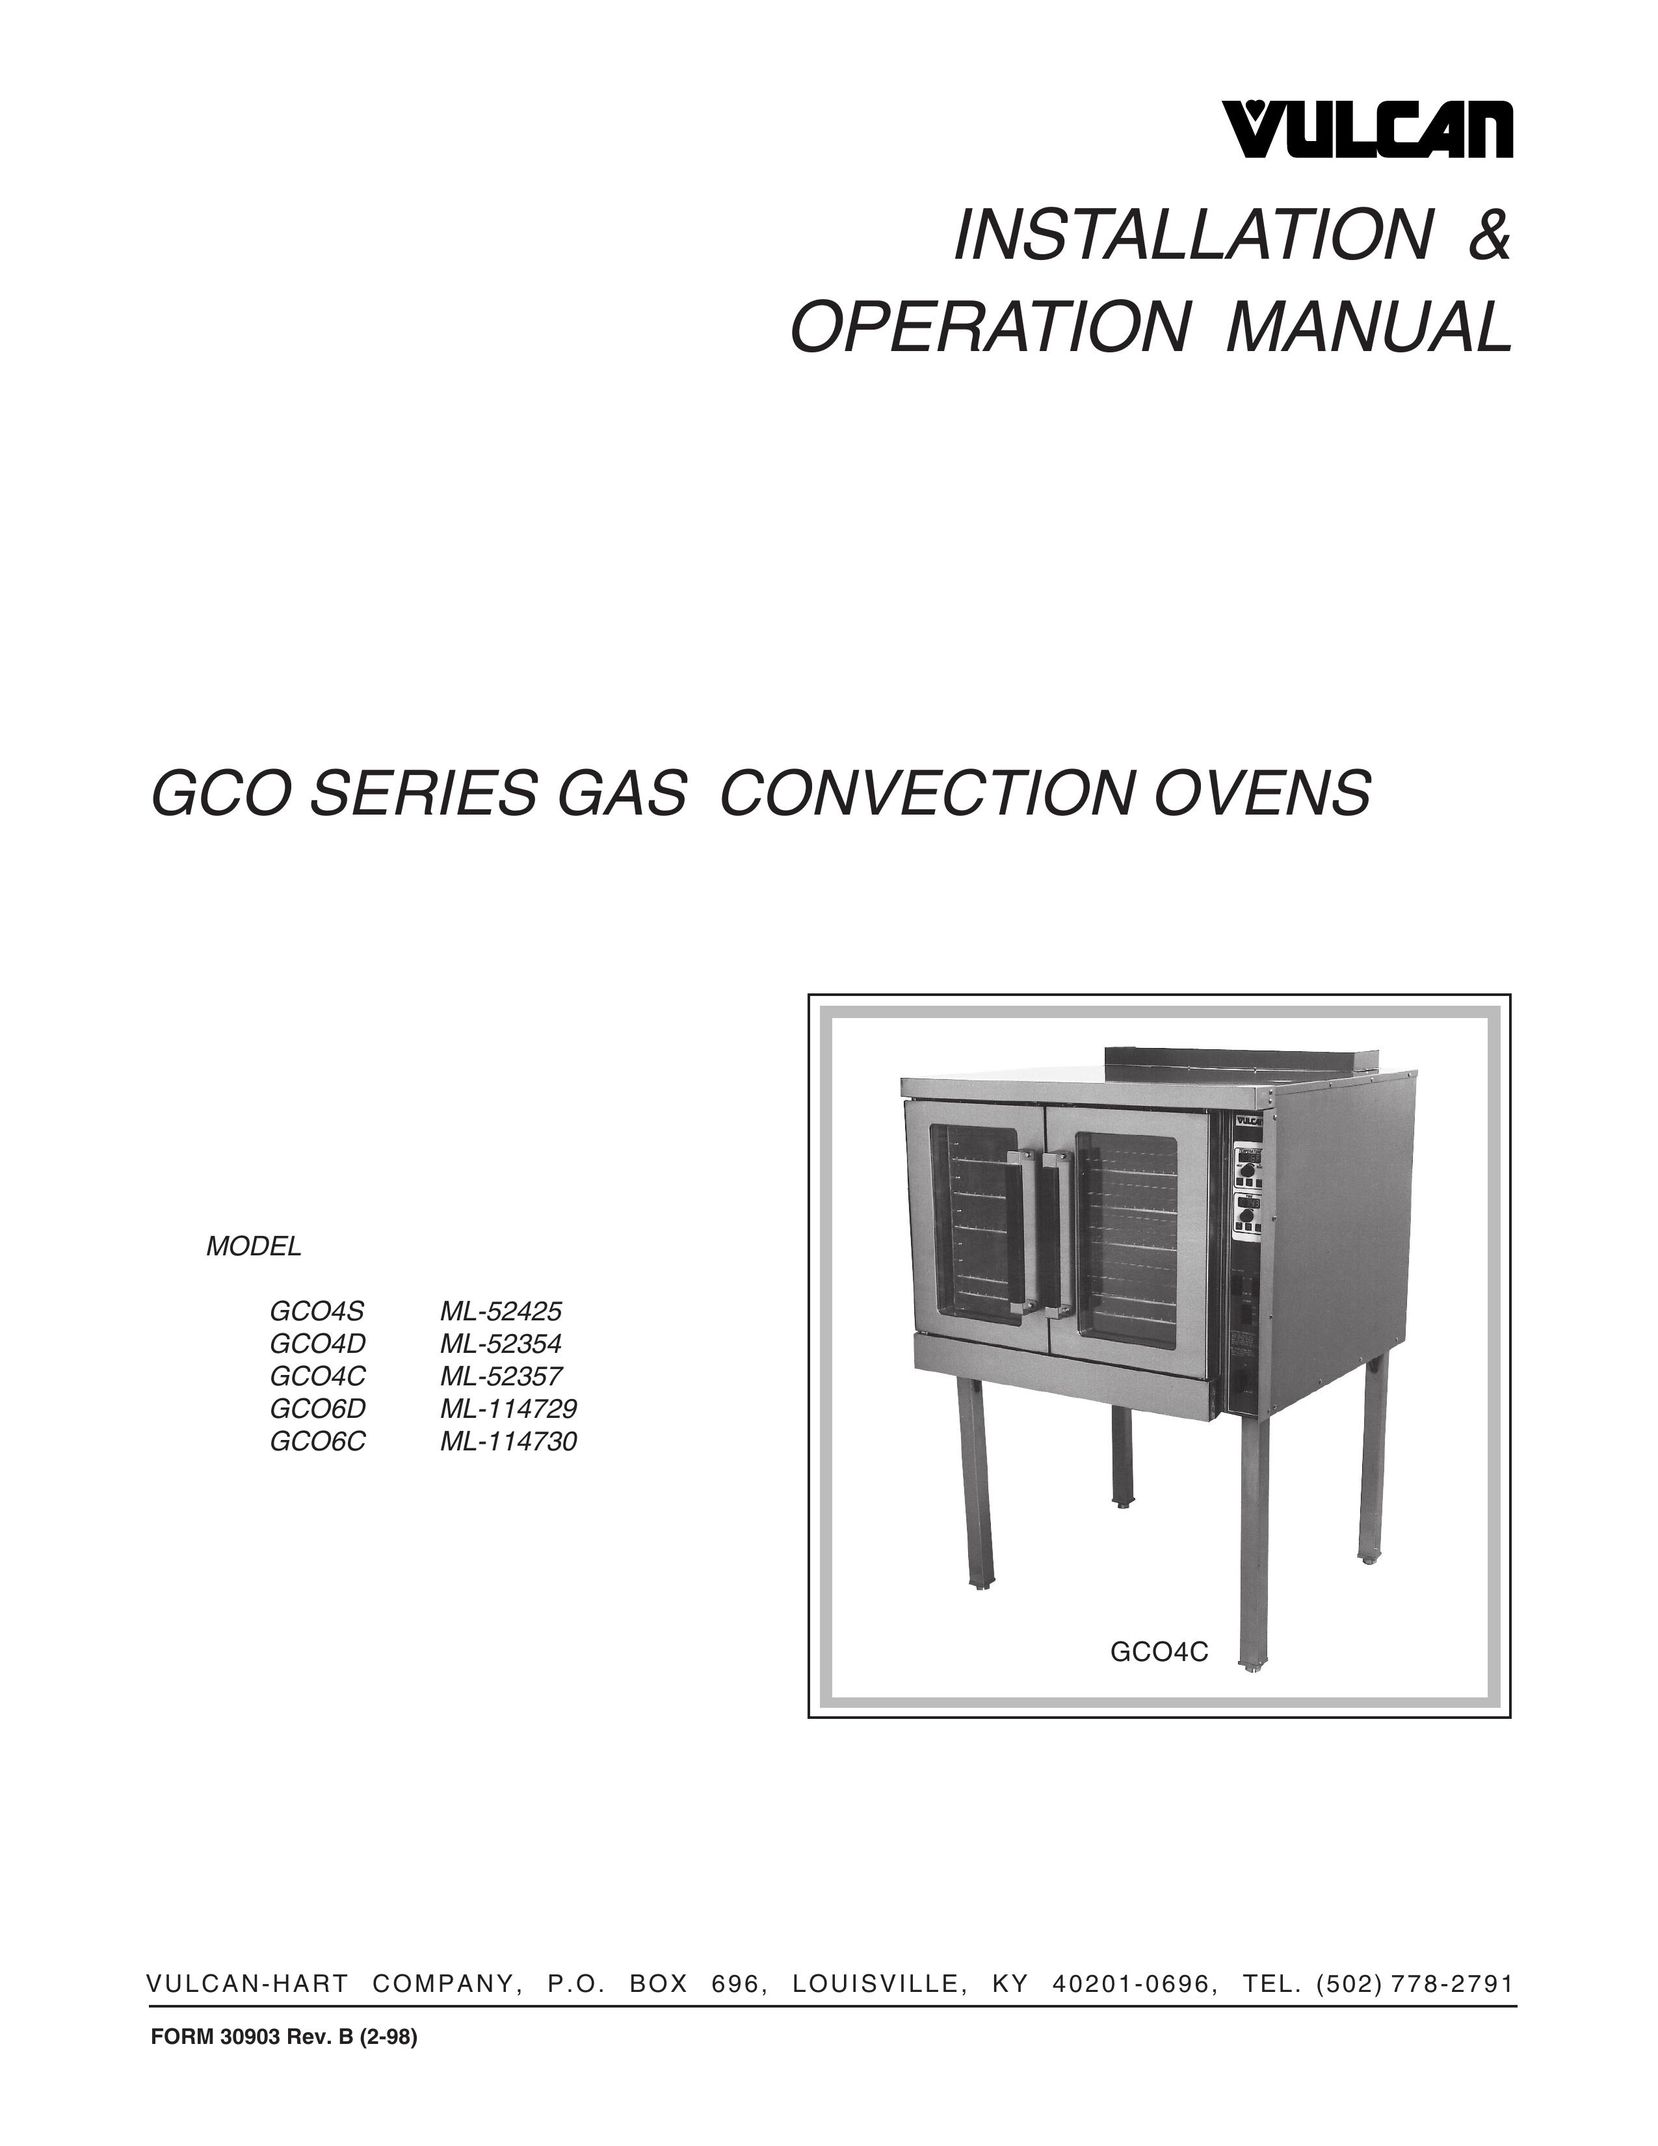 Vulcan-Hart GCO6C ML-114730 Oven User Manual